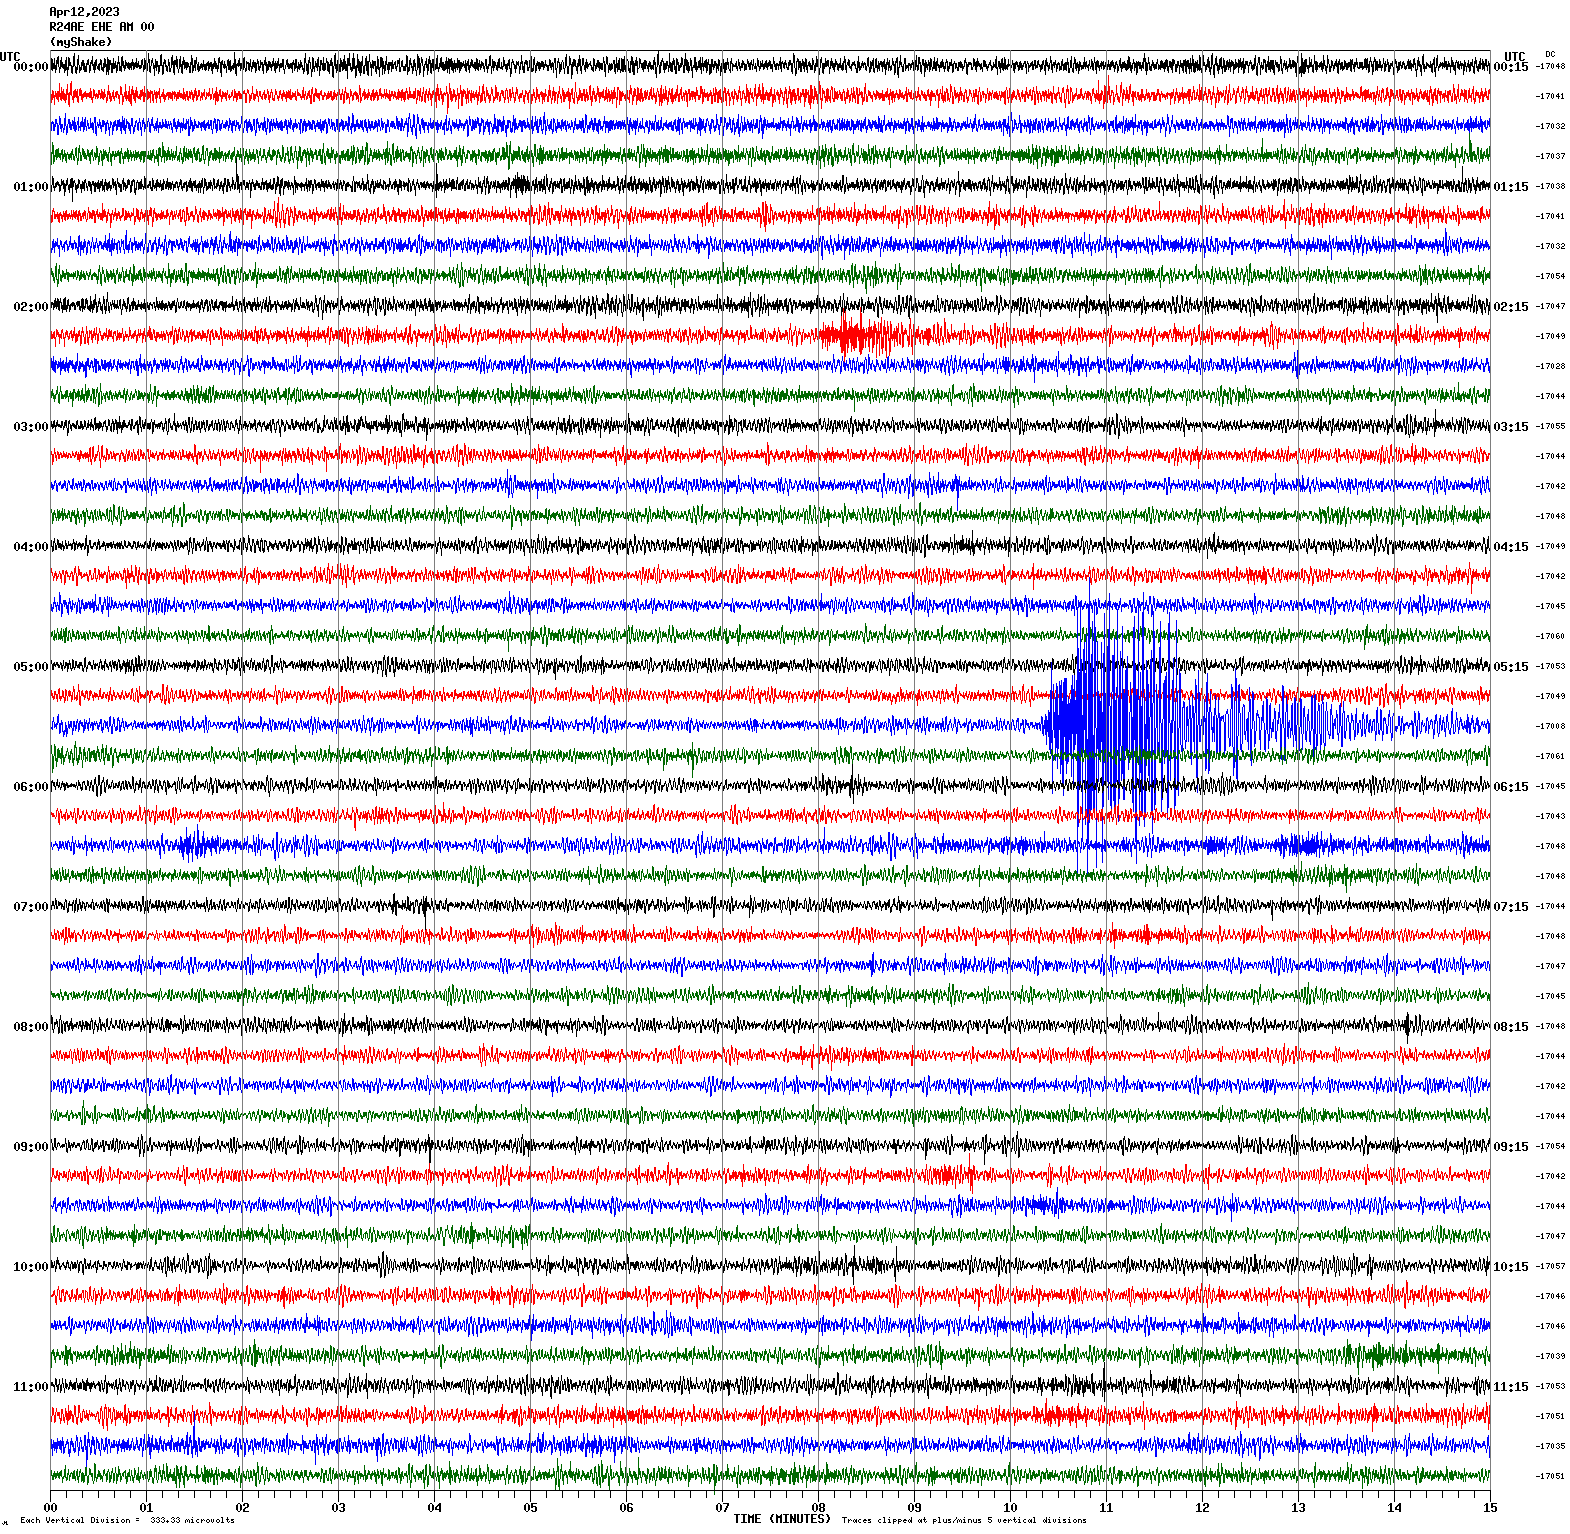 /seismic-data/R24AE/R24AE_EHE_AM_00.2023041200.gif